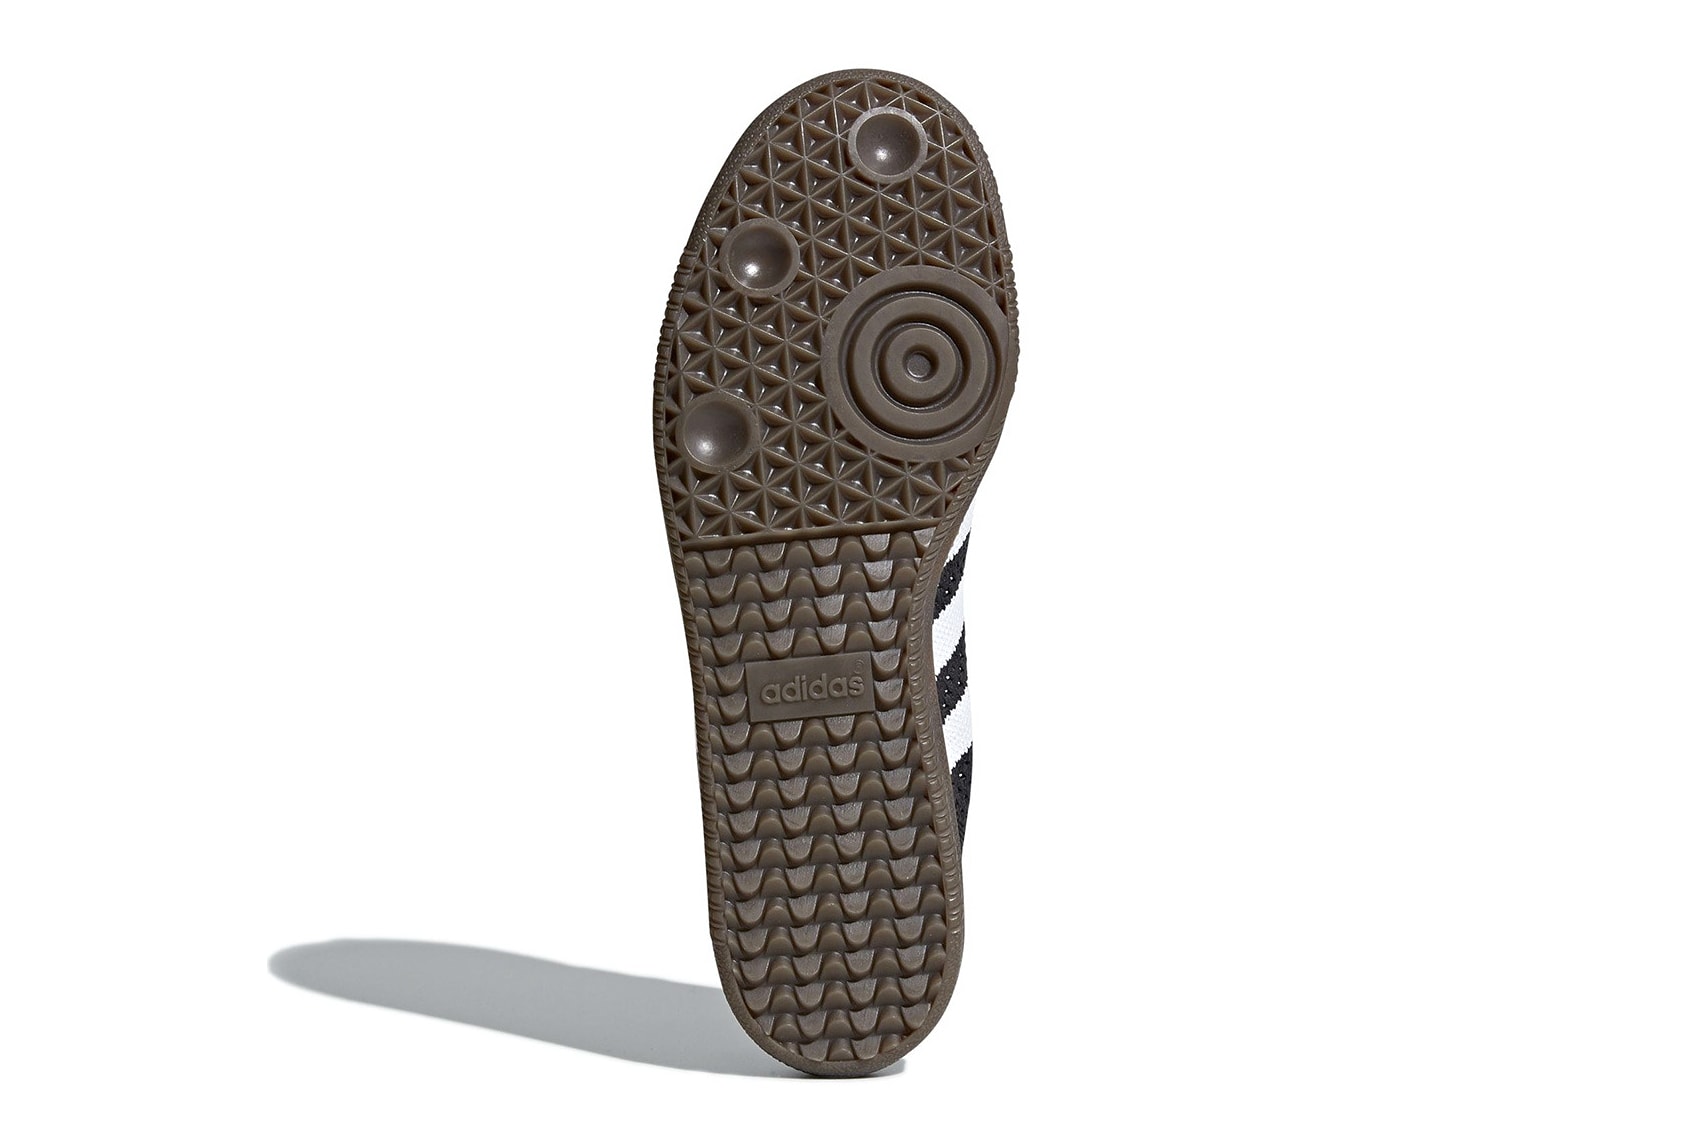 adidas Samba Primeknit black white April release info sneakers gfootwear